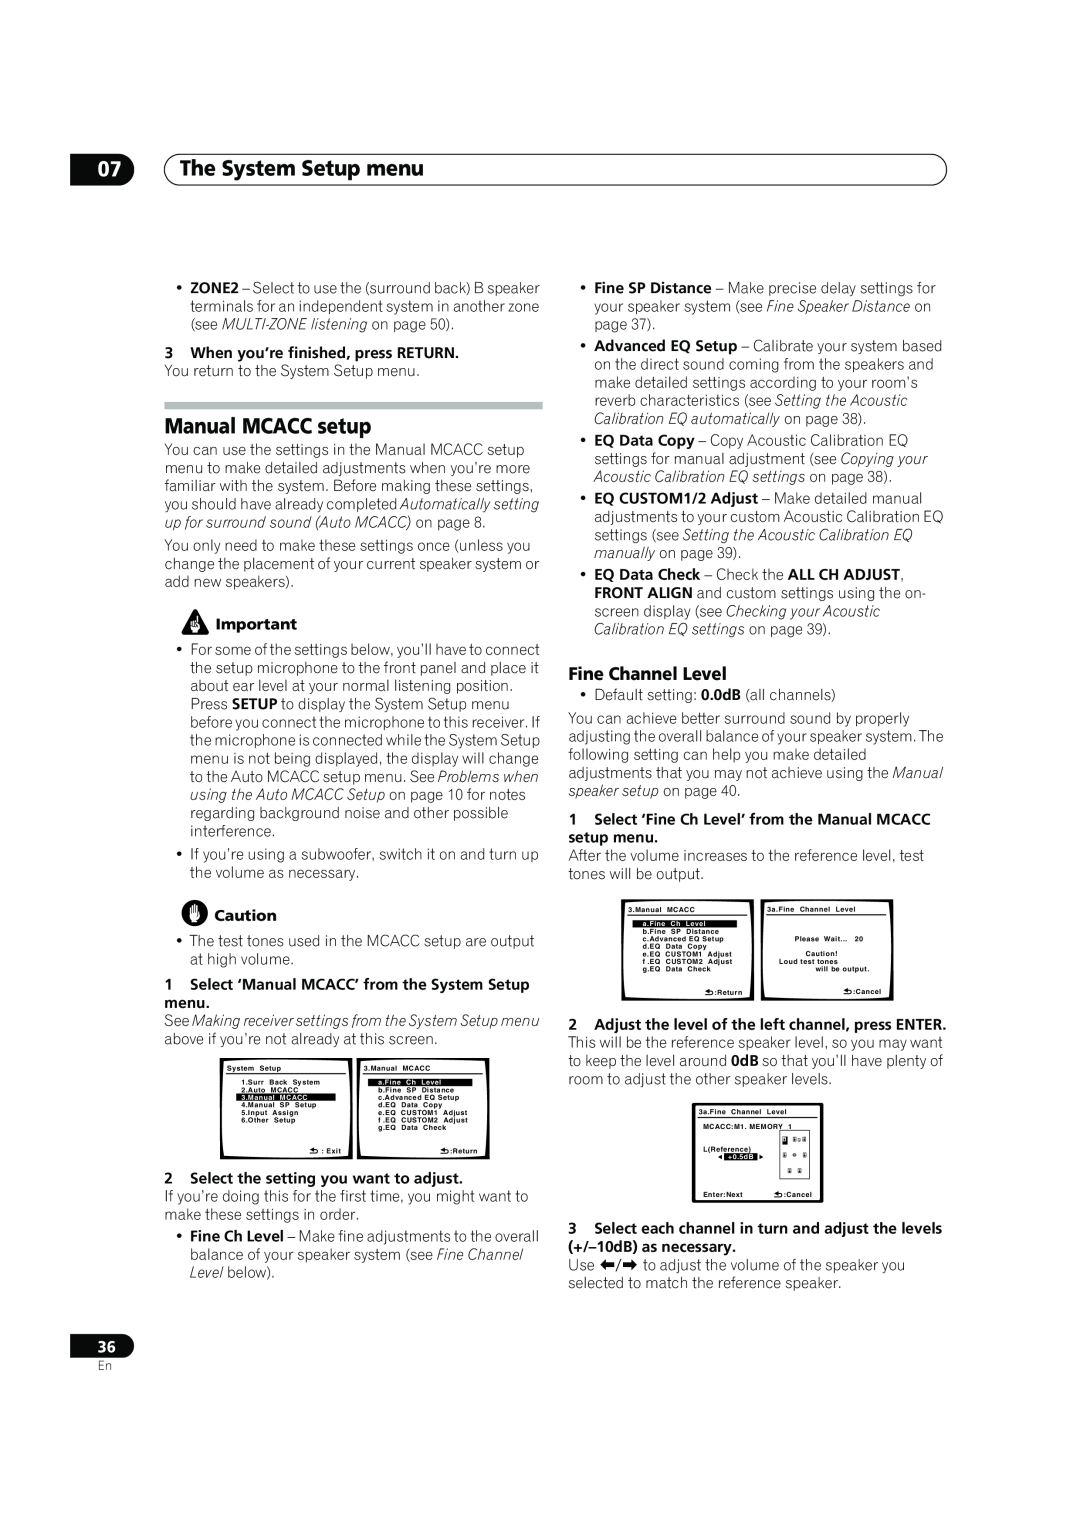 Pioneer VSX-90TXV operating instructions 07The System Setup menu, Manual MCACC setup, Fine Channel Level 